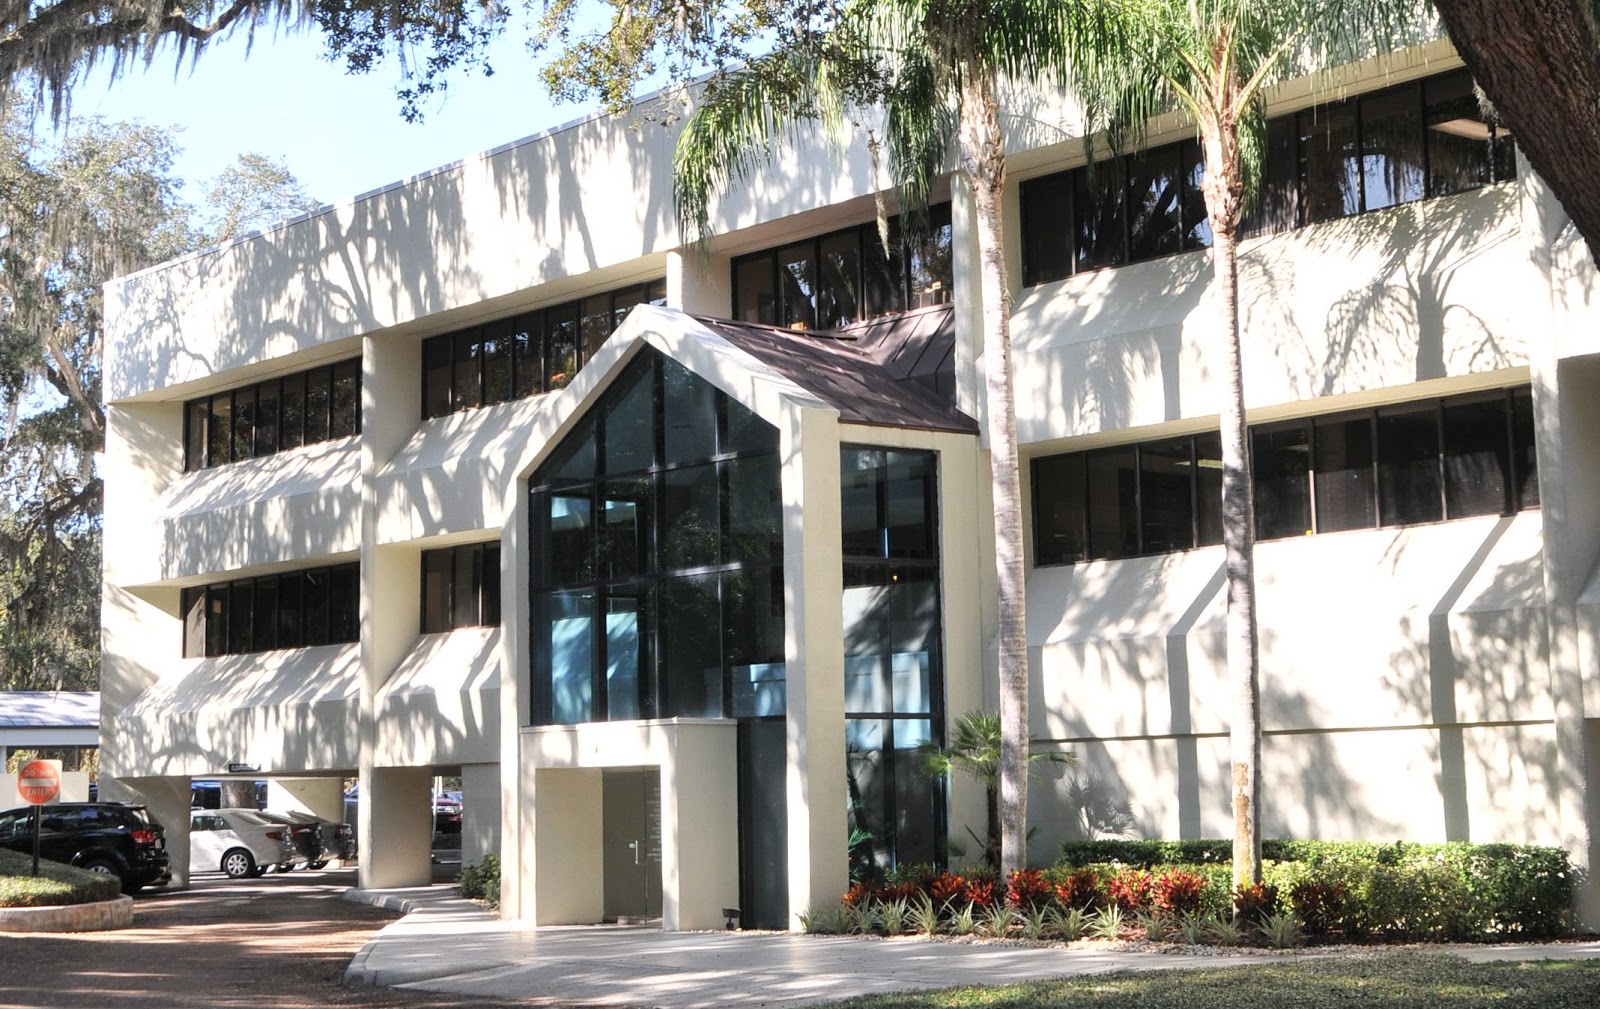 Phoenix House Florida - Derek Jeter Center